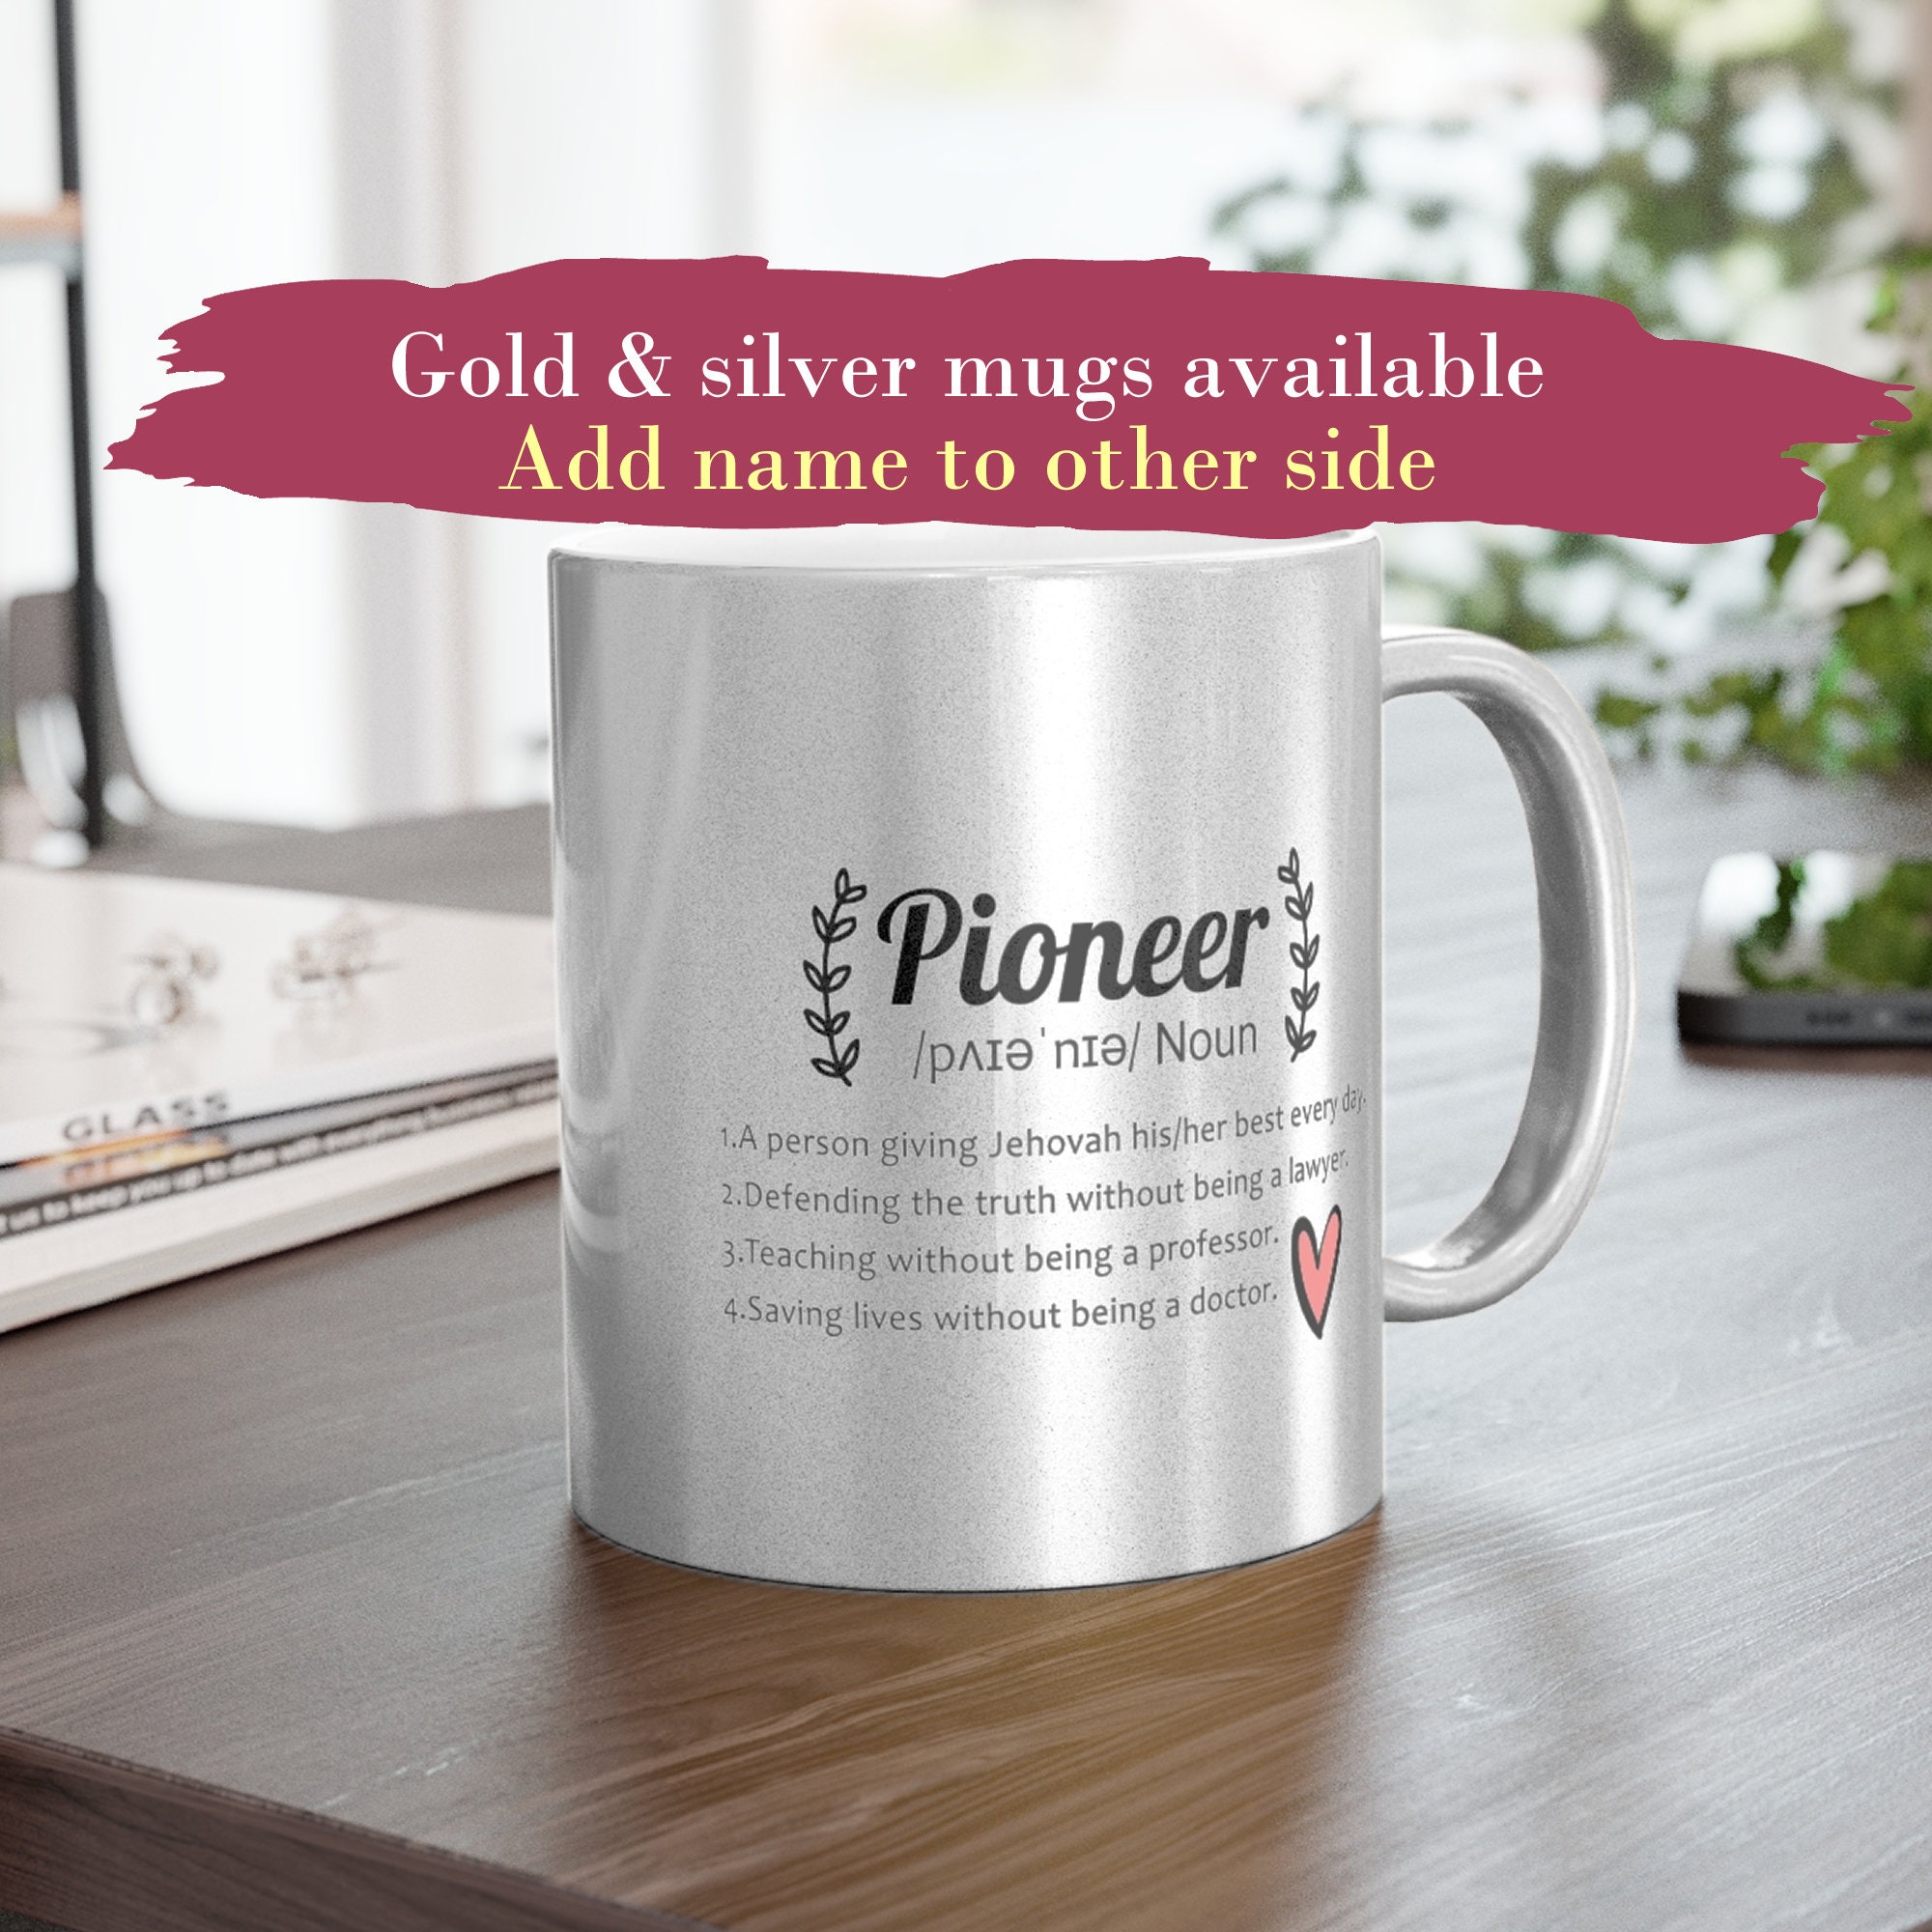  JW Pioneer School Mug, Personalized Memory Gift for